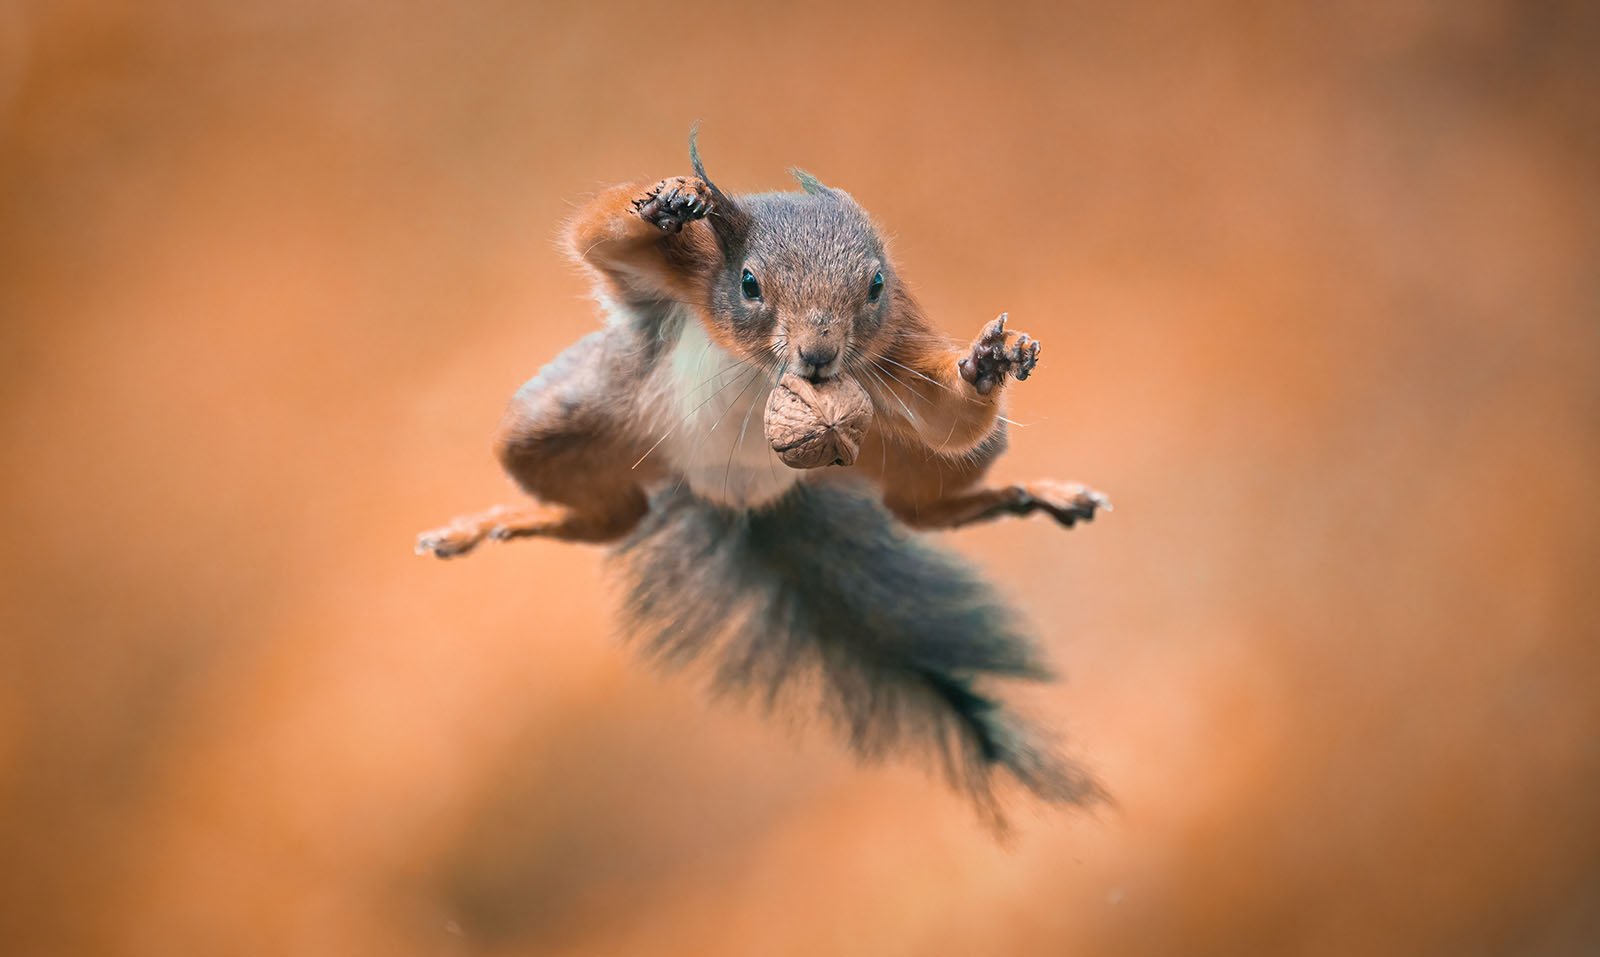 Acrobatic Squirrels Captured in a Series of Amazing Photos